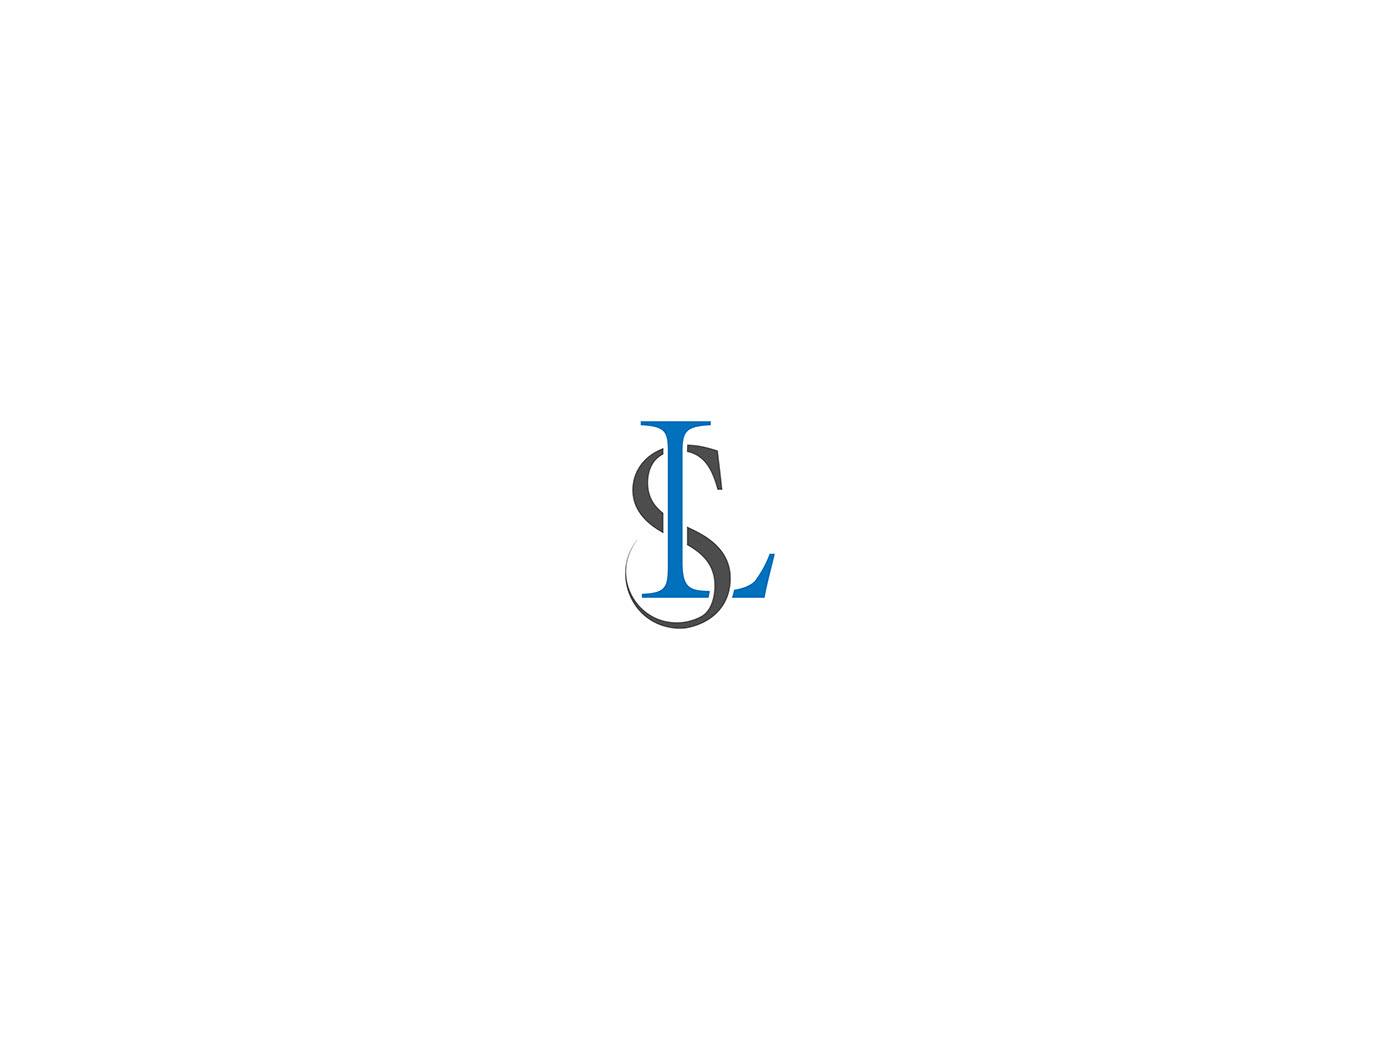 LS logo design modern minimalist logo